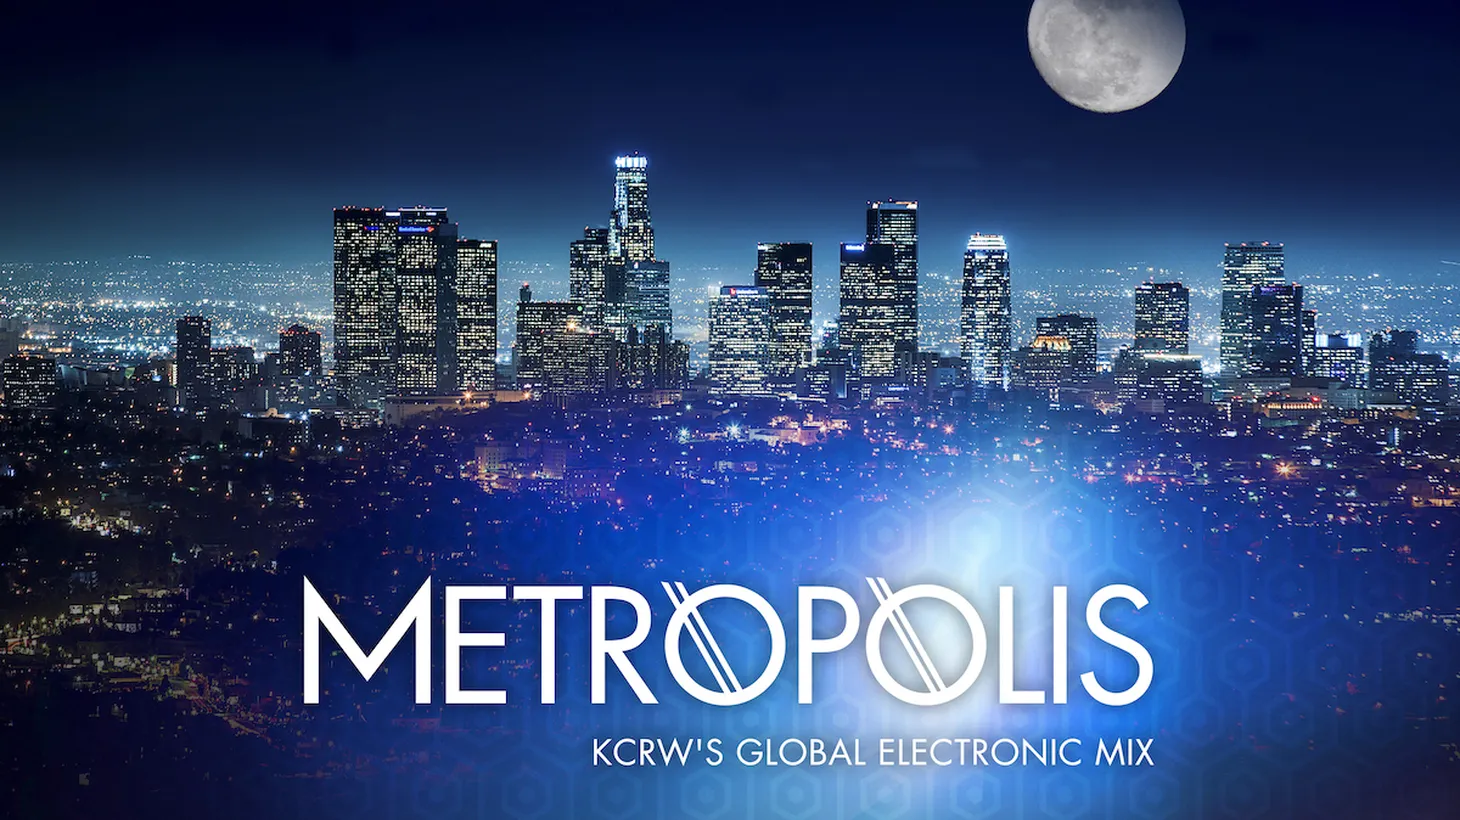 Metropolis playlist, December 4, 2021.